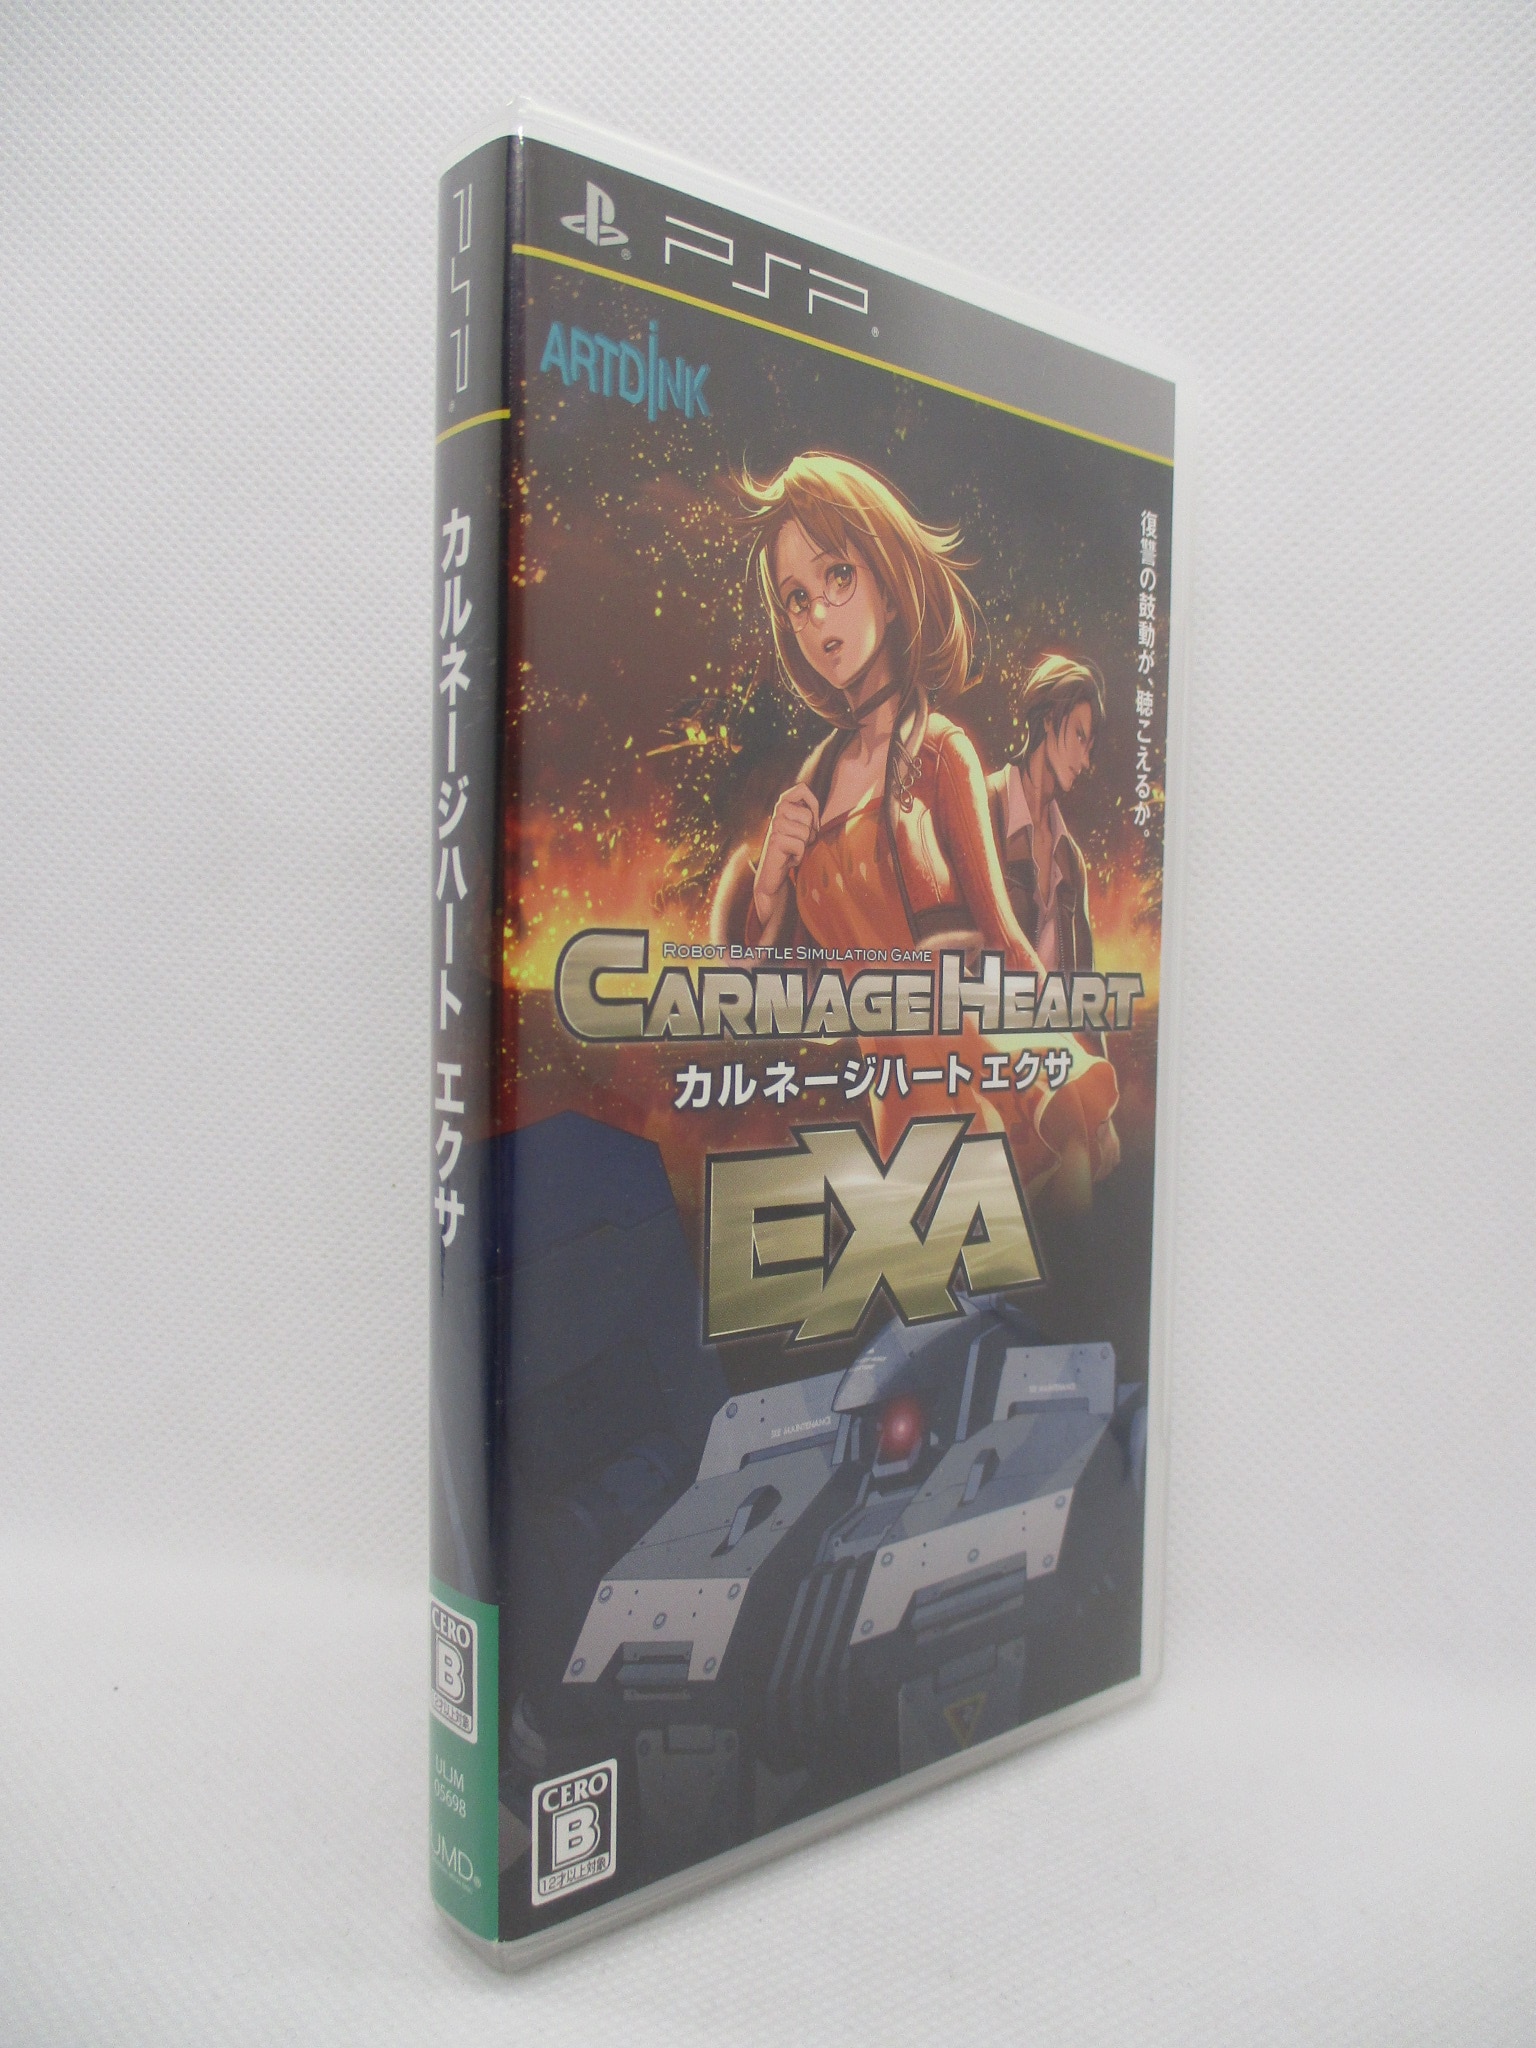 SALE＆送料無料 Carnage PS1 EZ カルネージハート PlayStation 新品未 